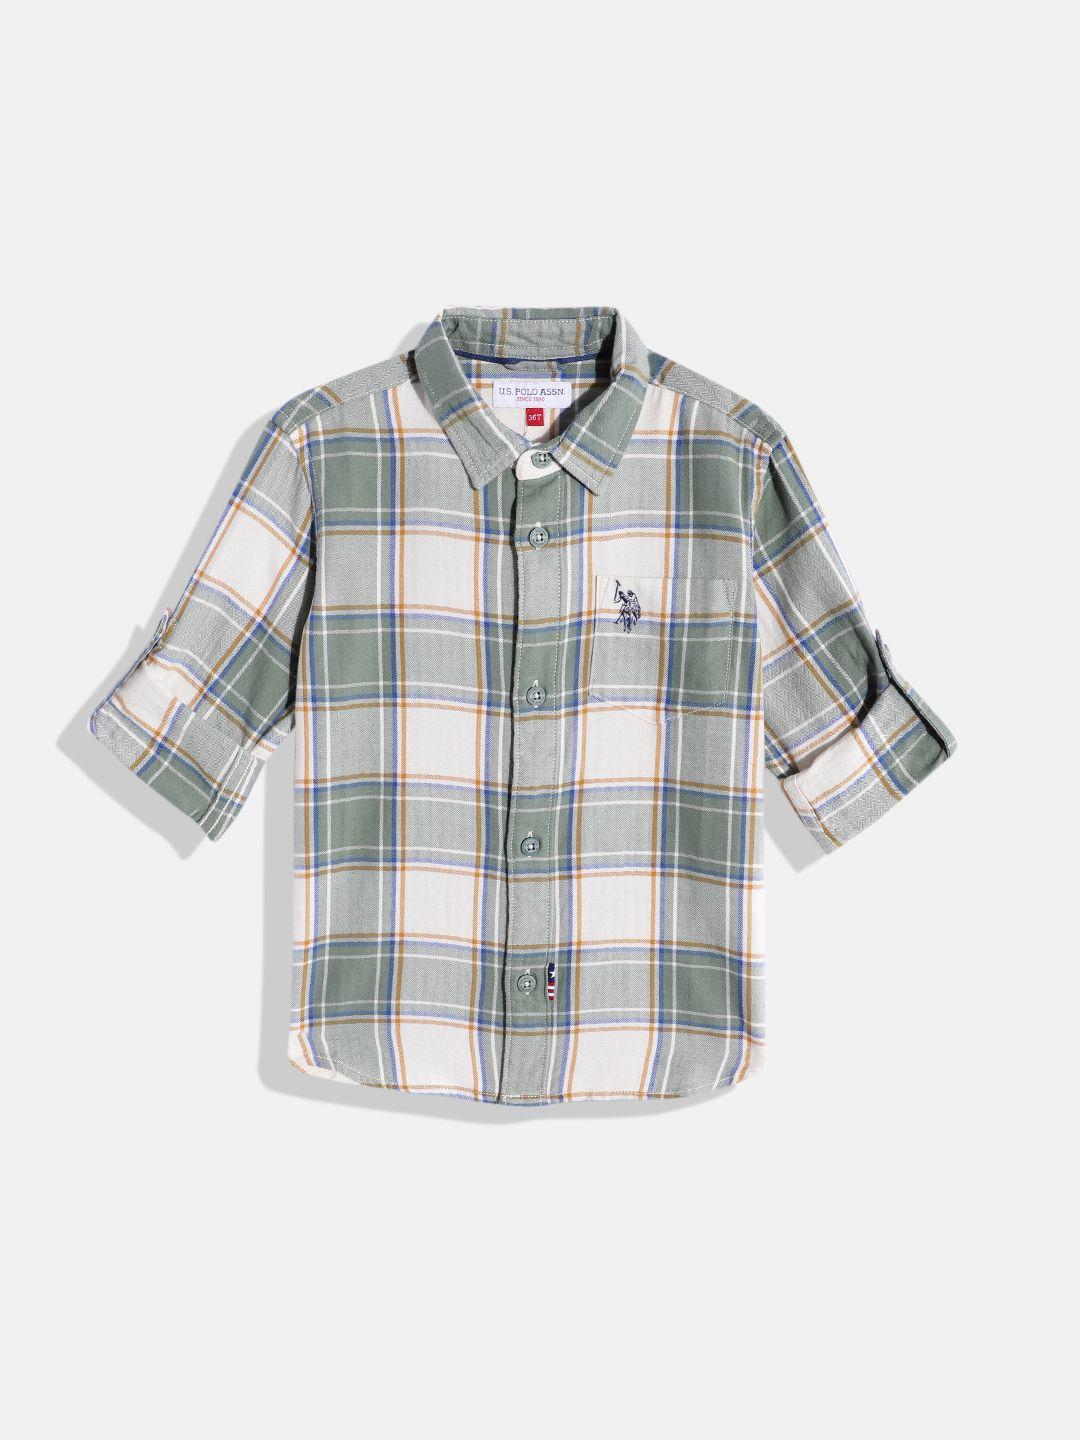 u.s. polo assn. kids boys tartan checked pure cotton regular fit opaque casual shirt